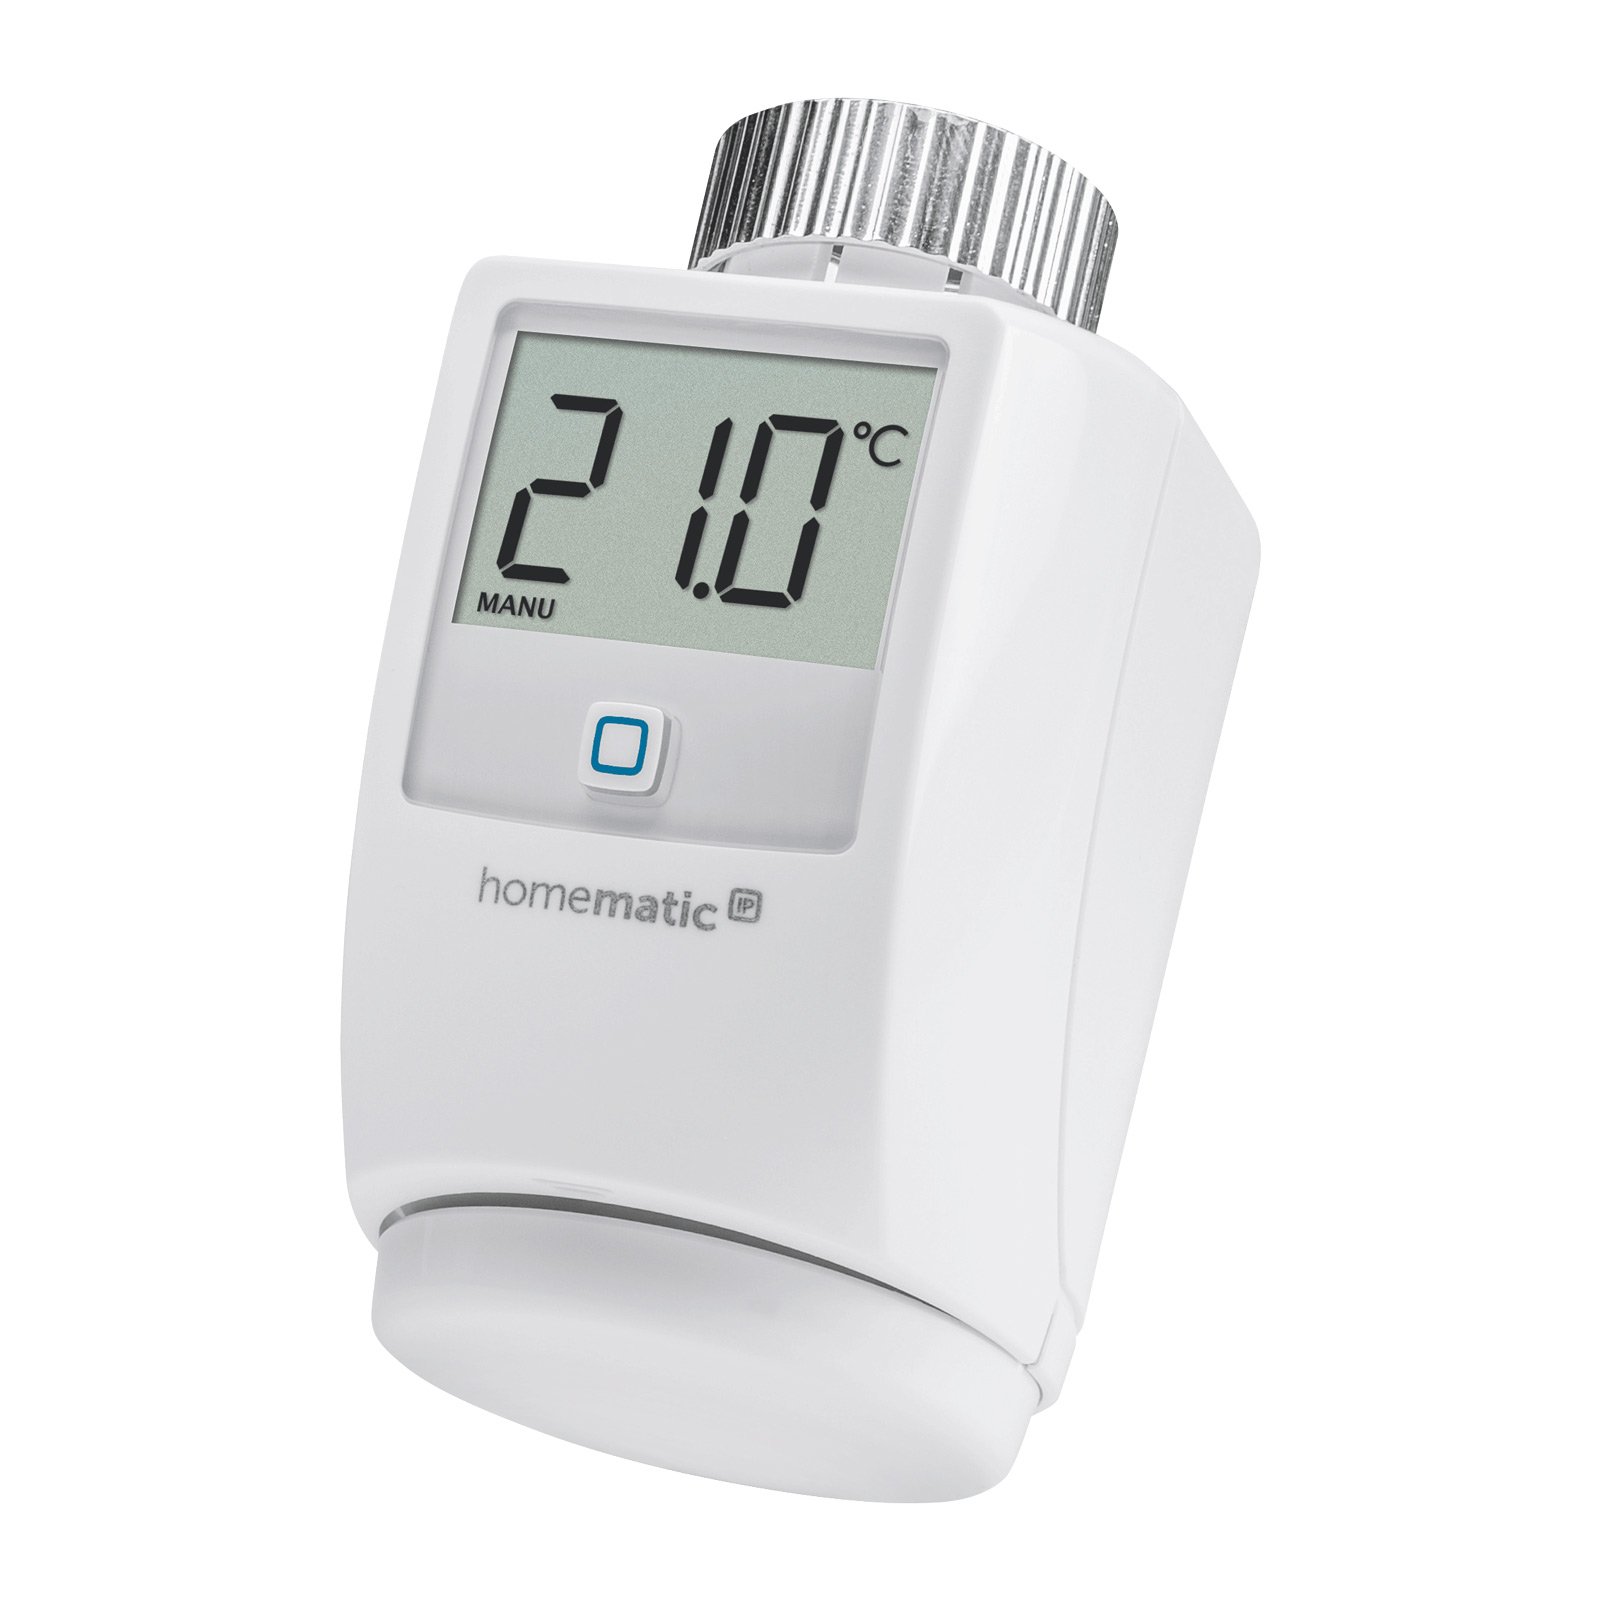 Homematic IP radiator thermostat